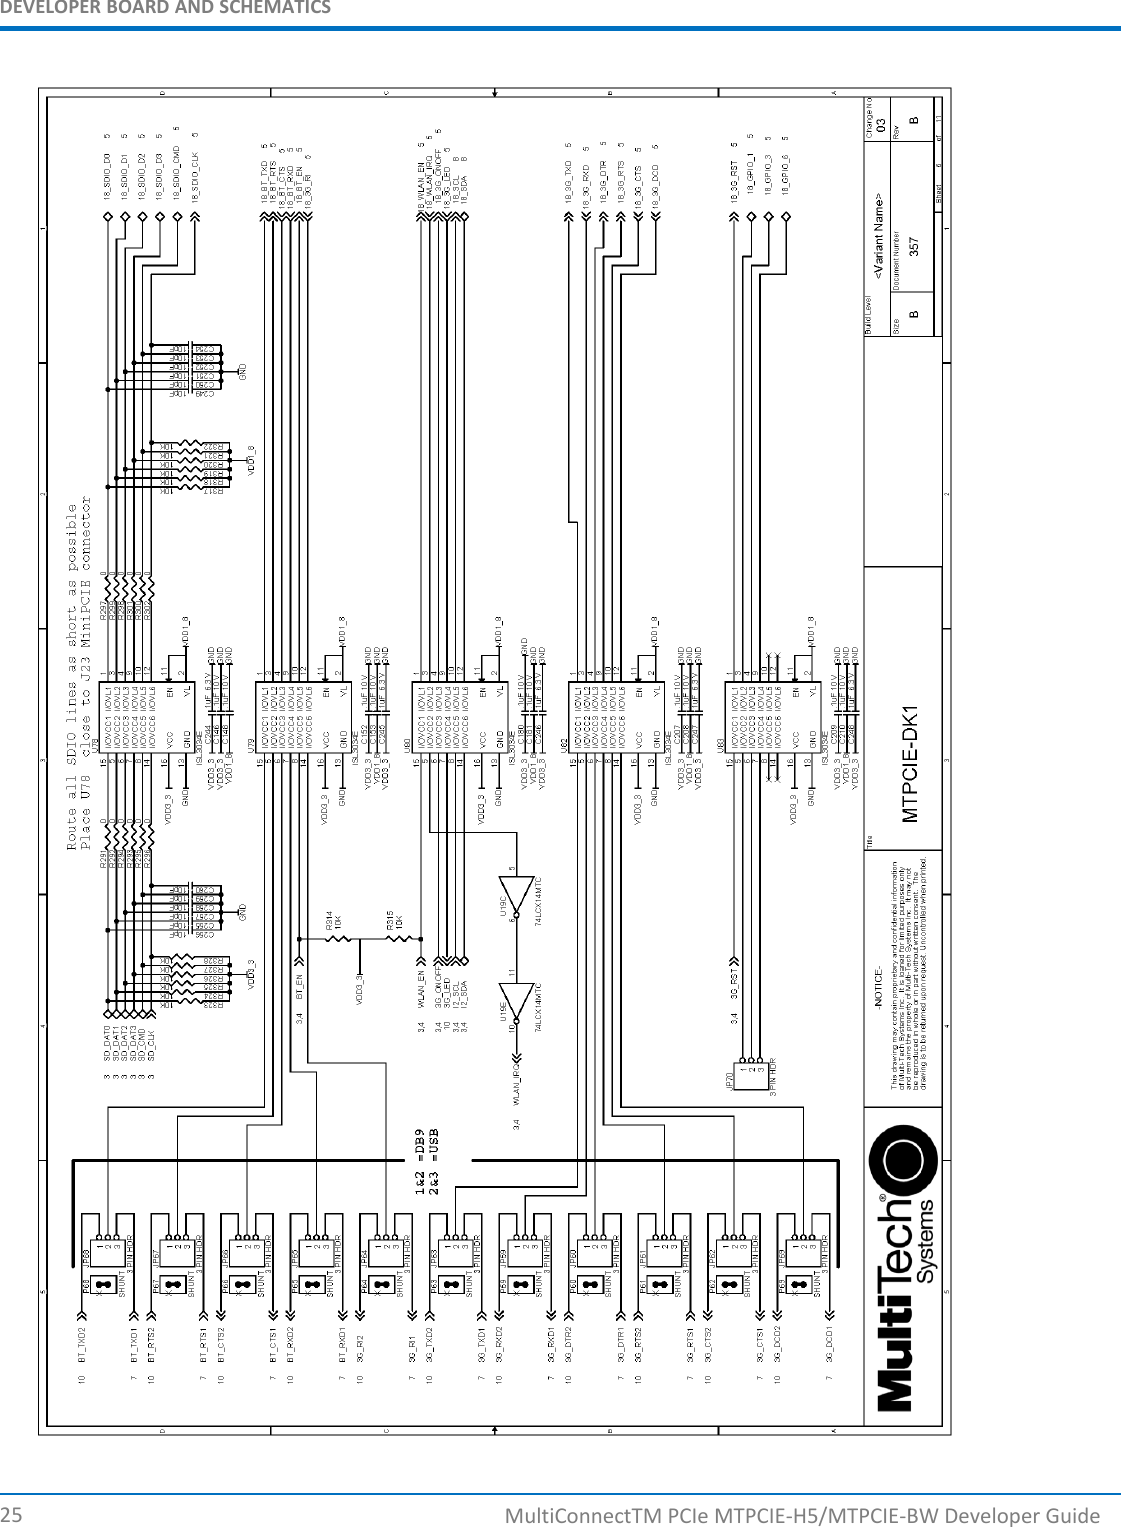 DEVELOPER BOARD AND SCHEMATICS25MultiConnectTM PCIe MTPCIE-H5/MTPCIE-BW Developer Guide